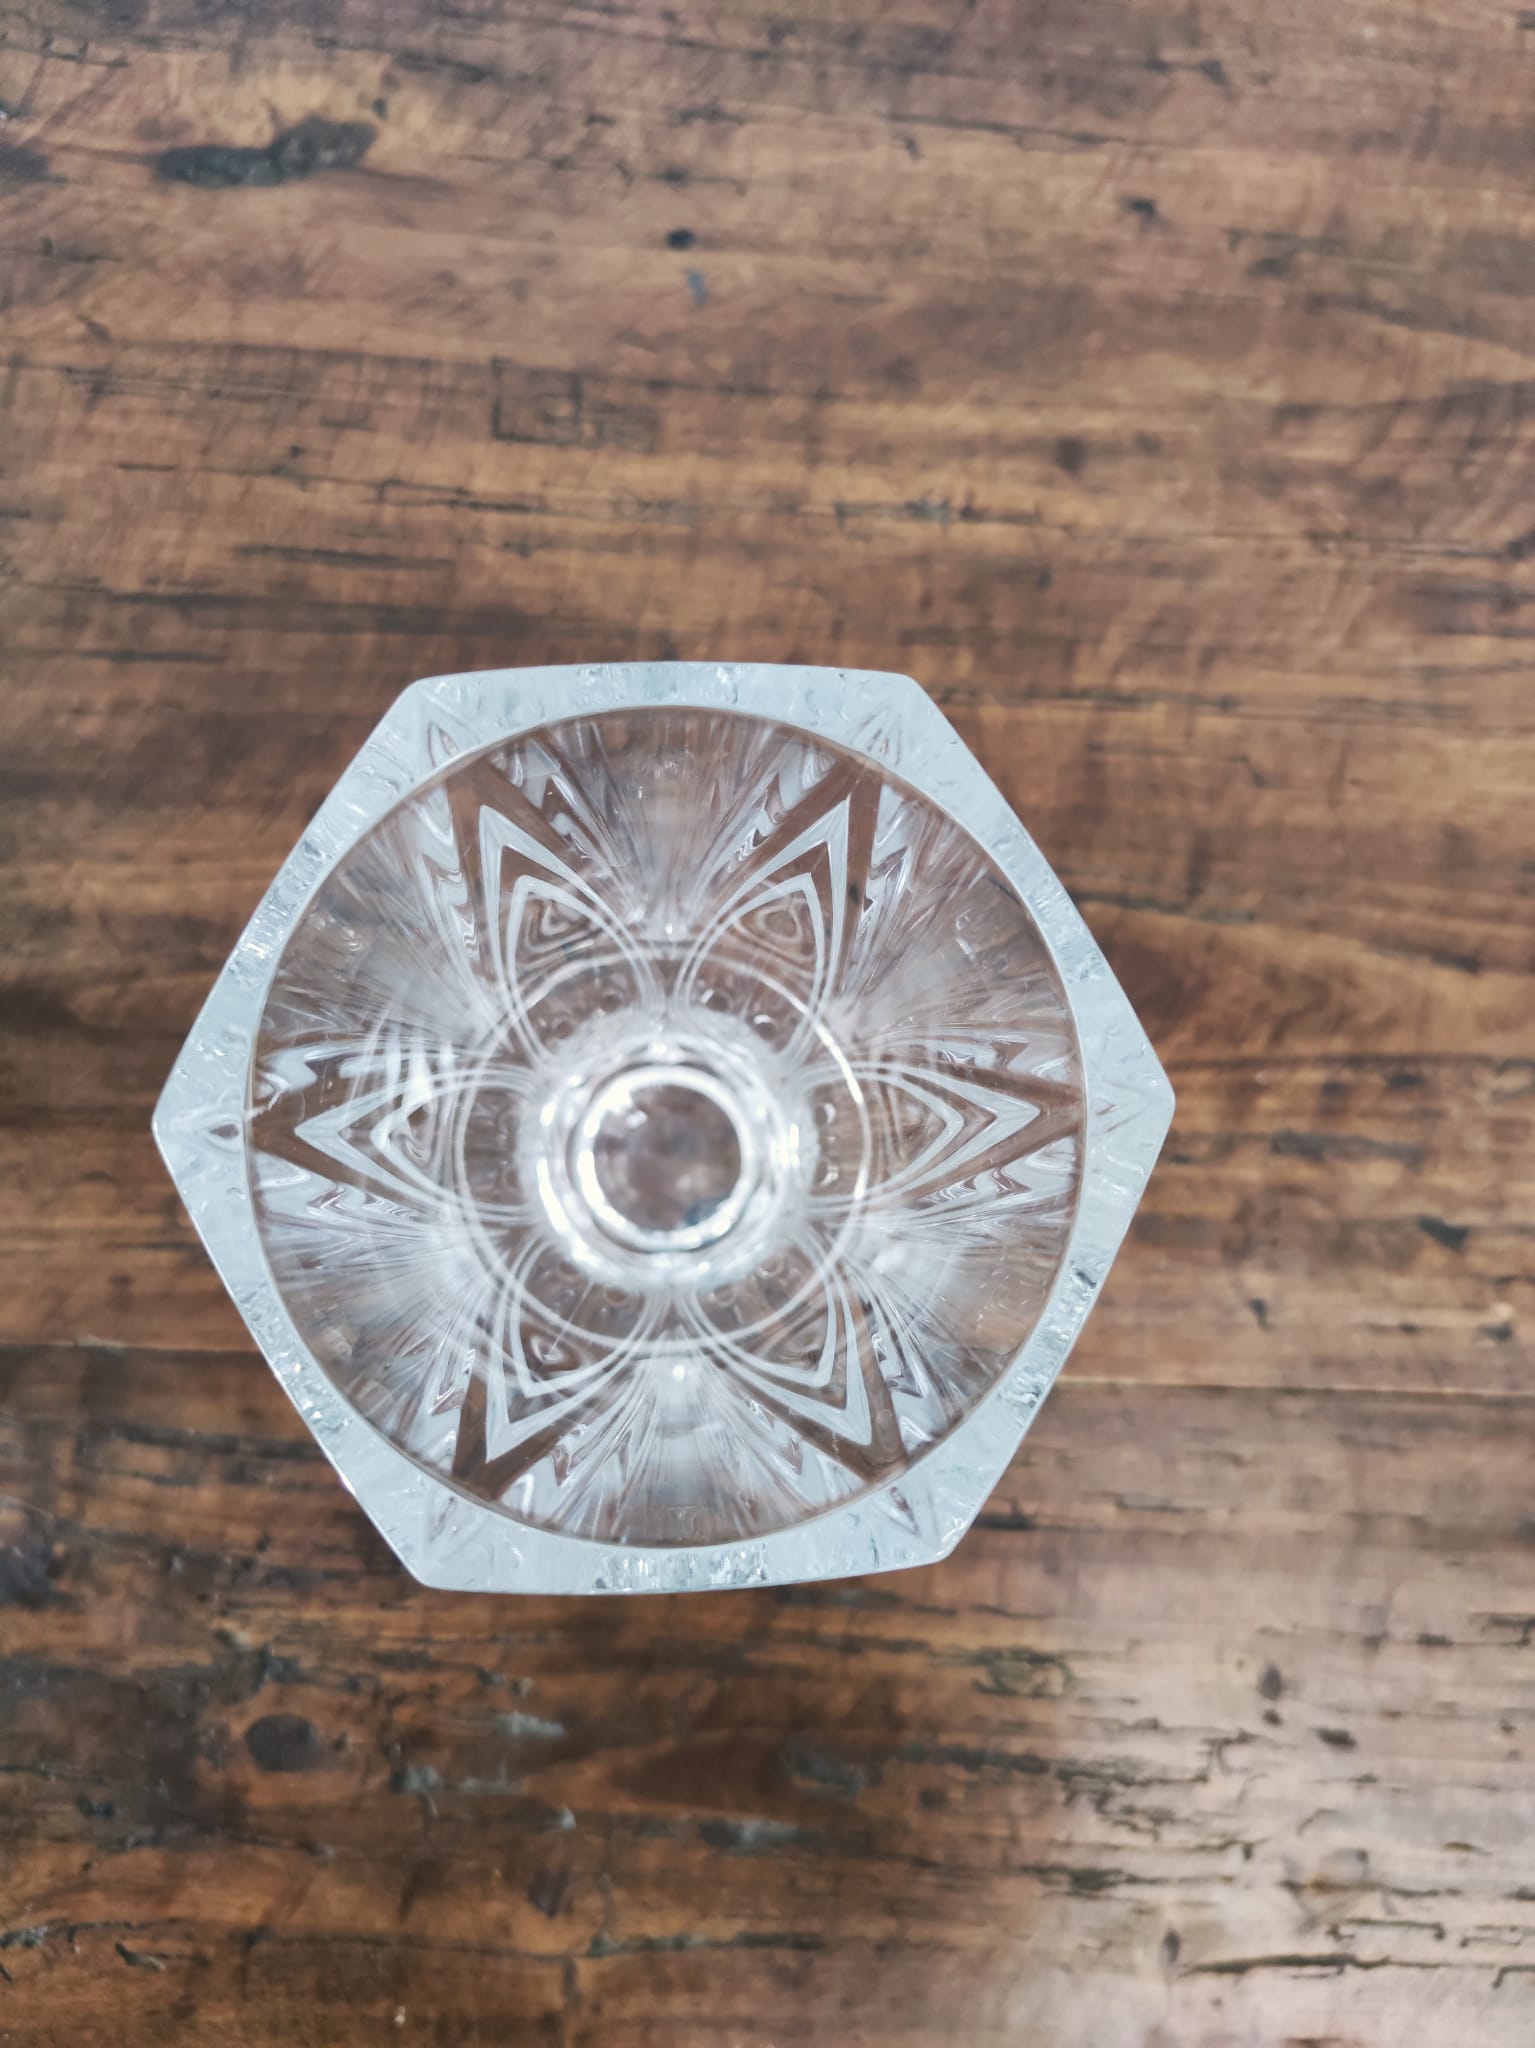 Vase en verre soufflé, bord polygonal, H: 24cm.